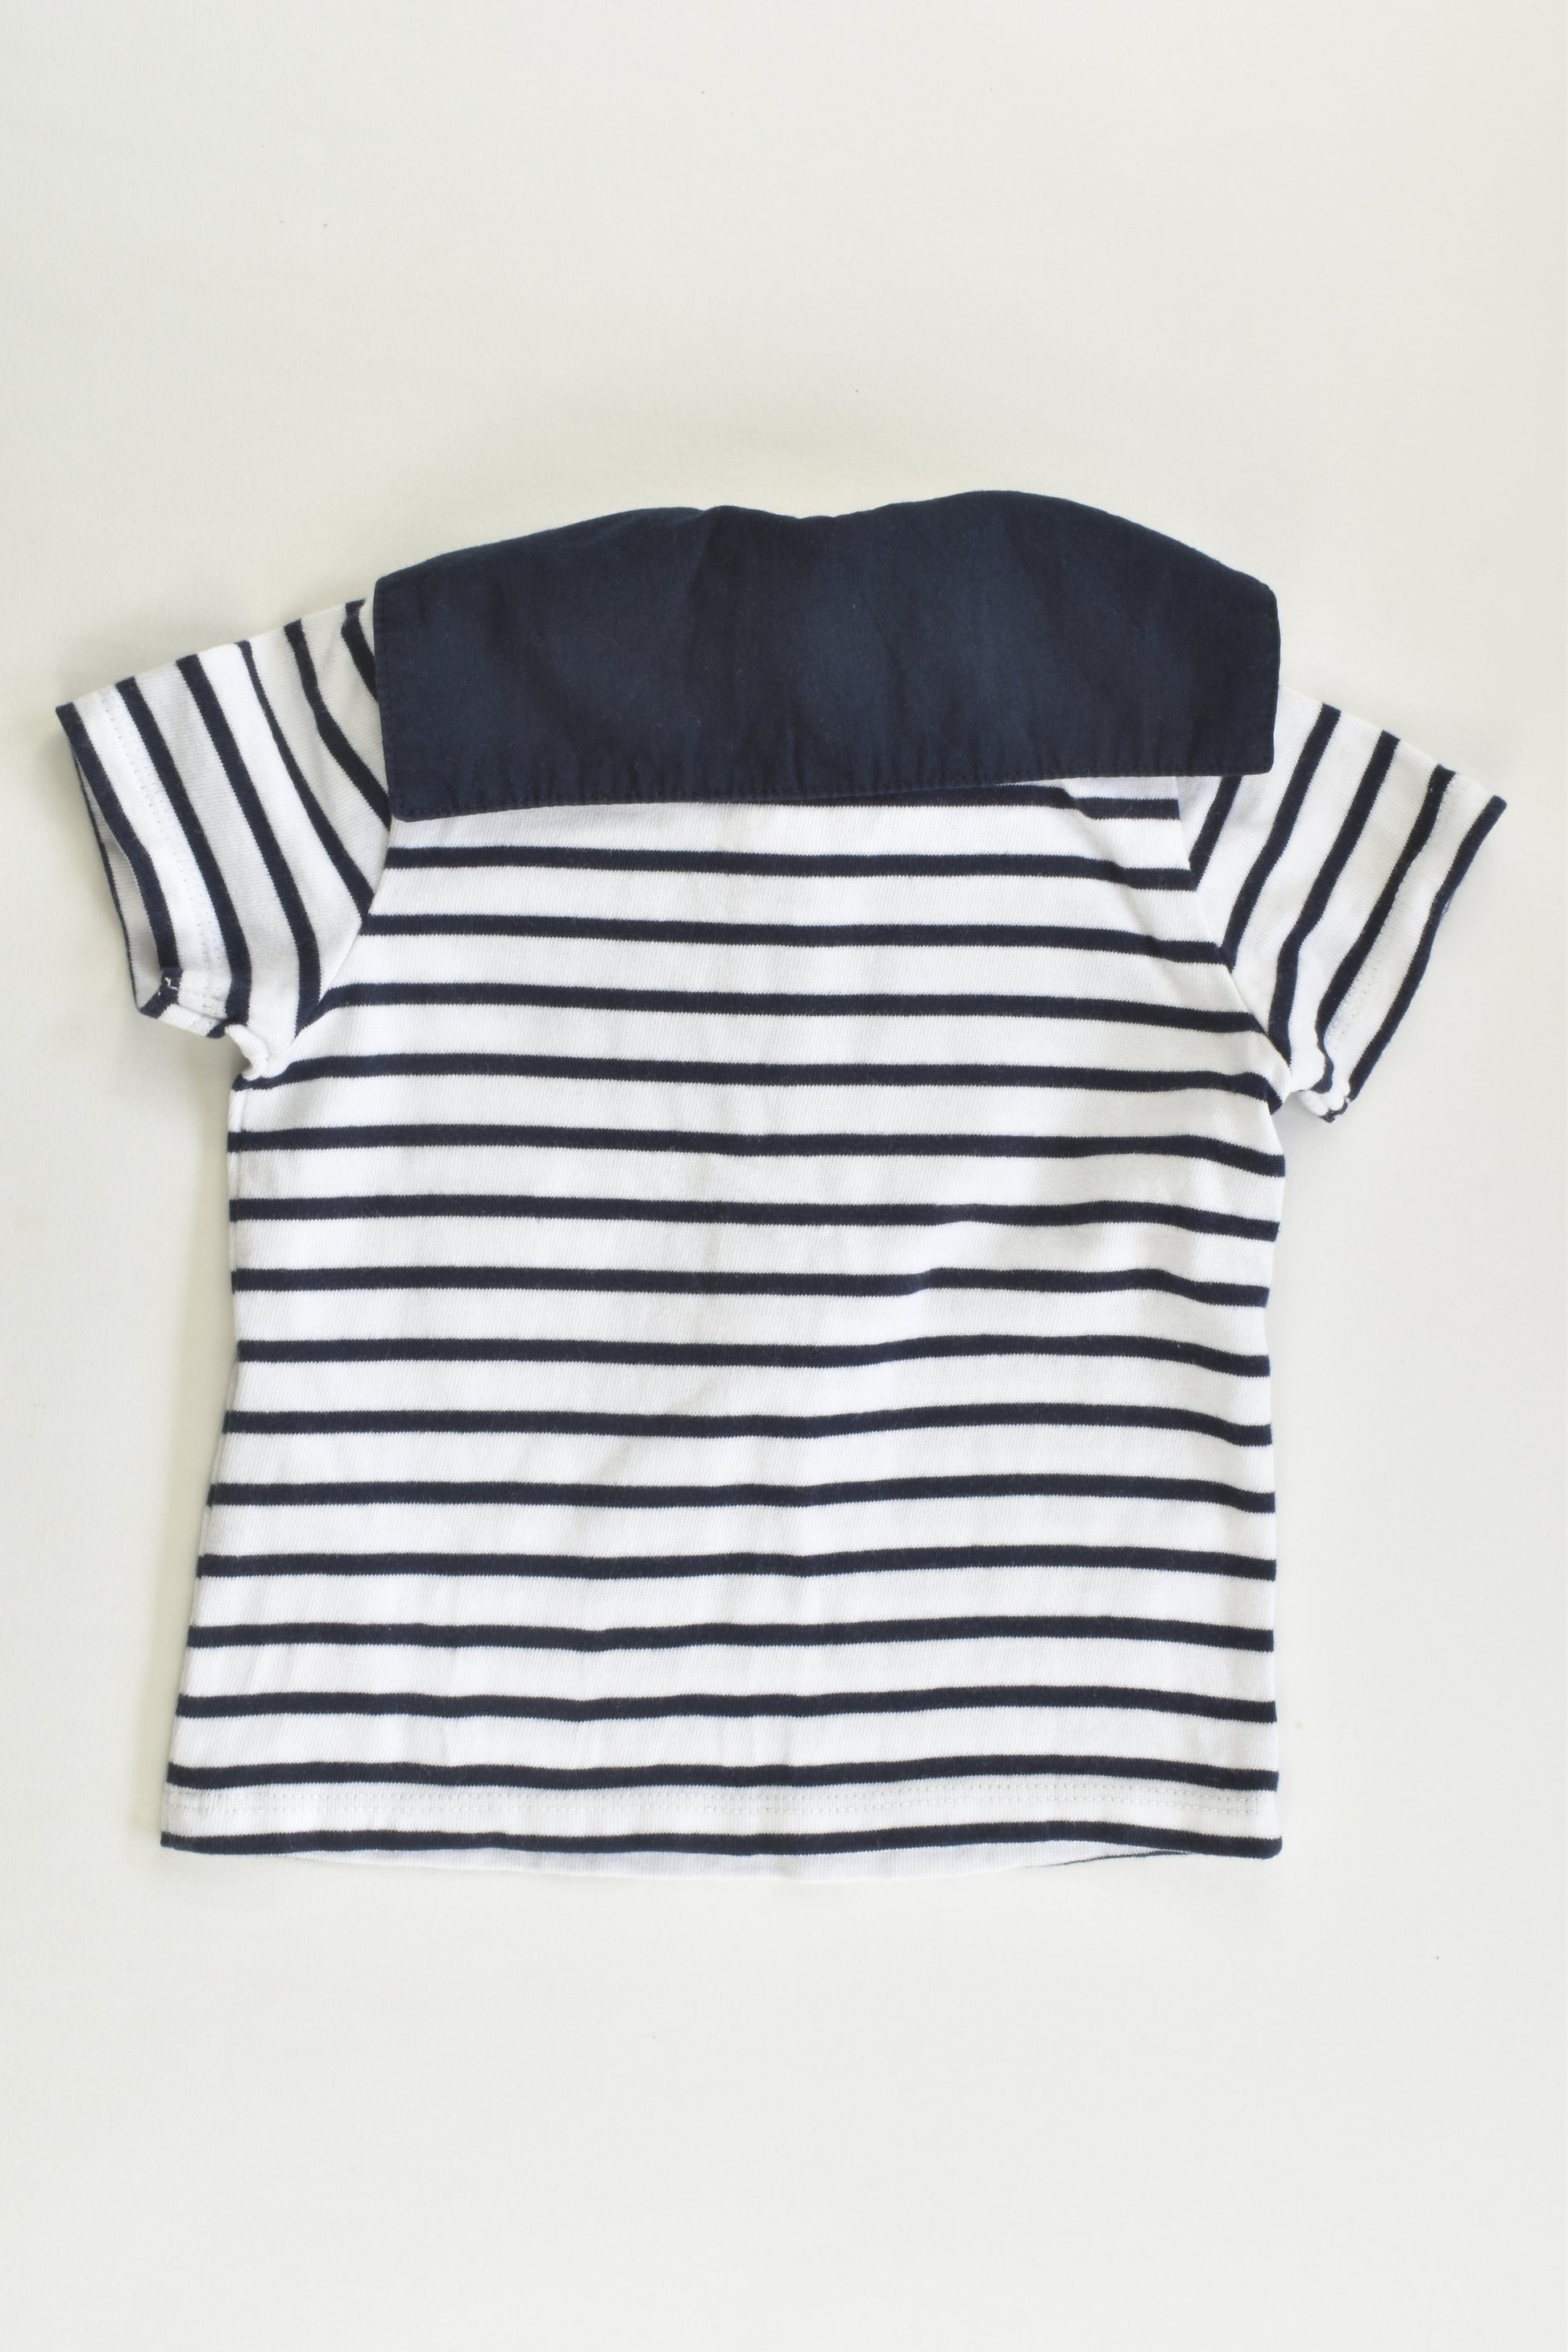 Jasper Conran Junior Size 00 Nautical T-shirt